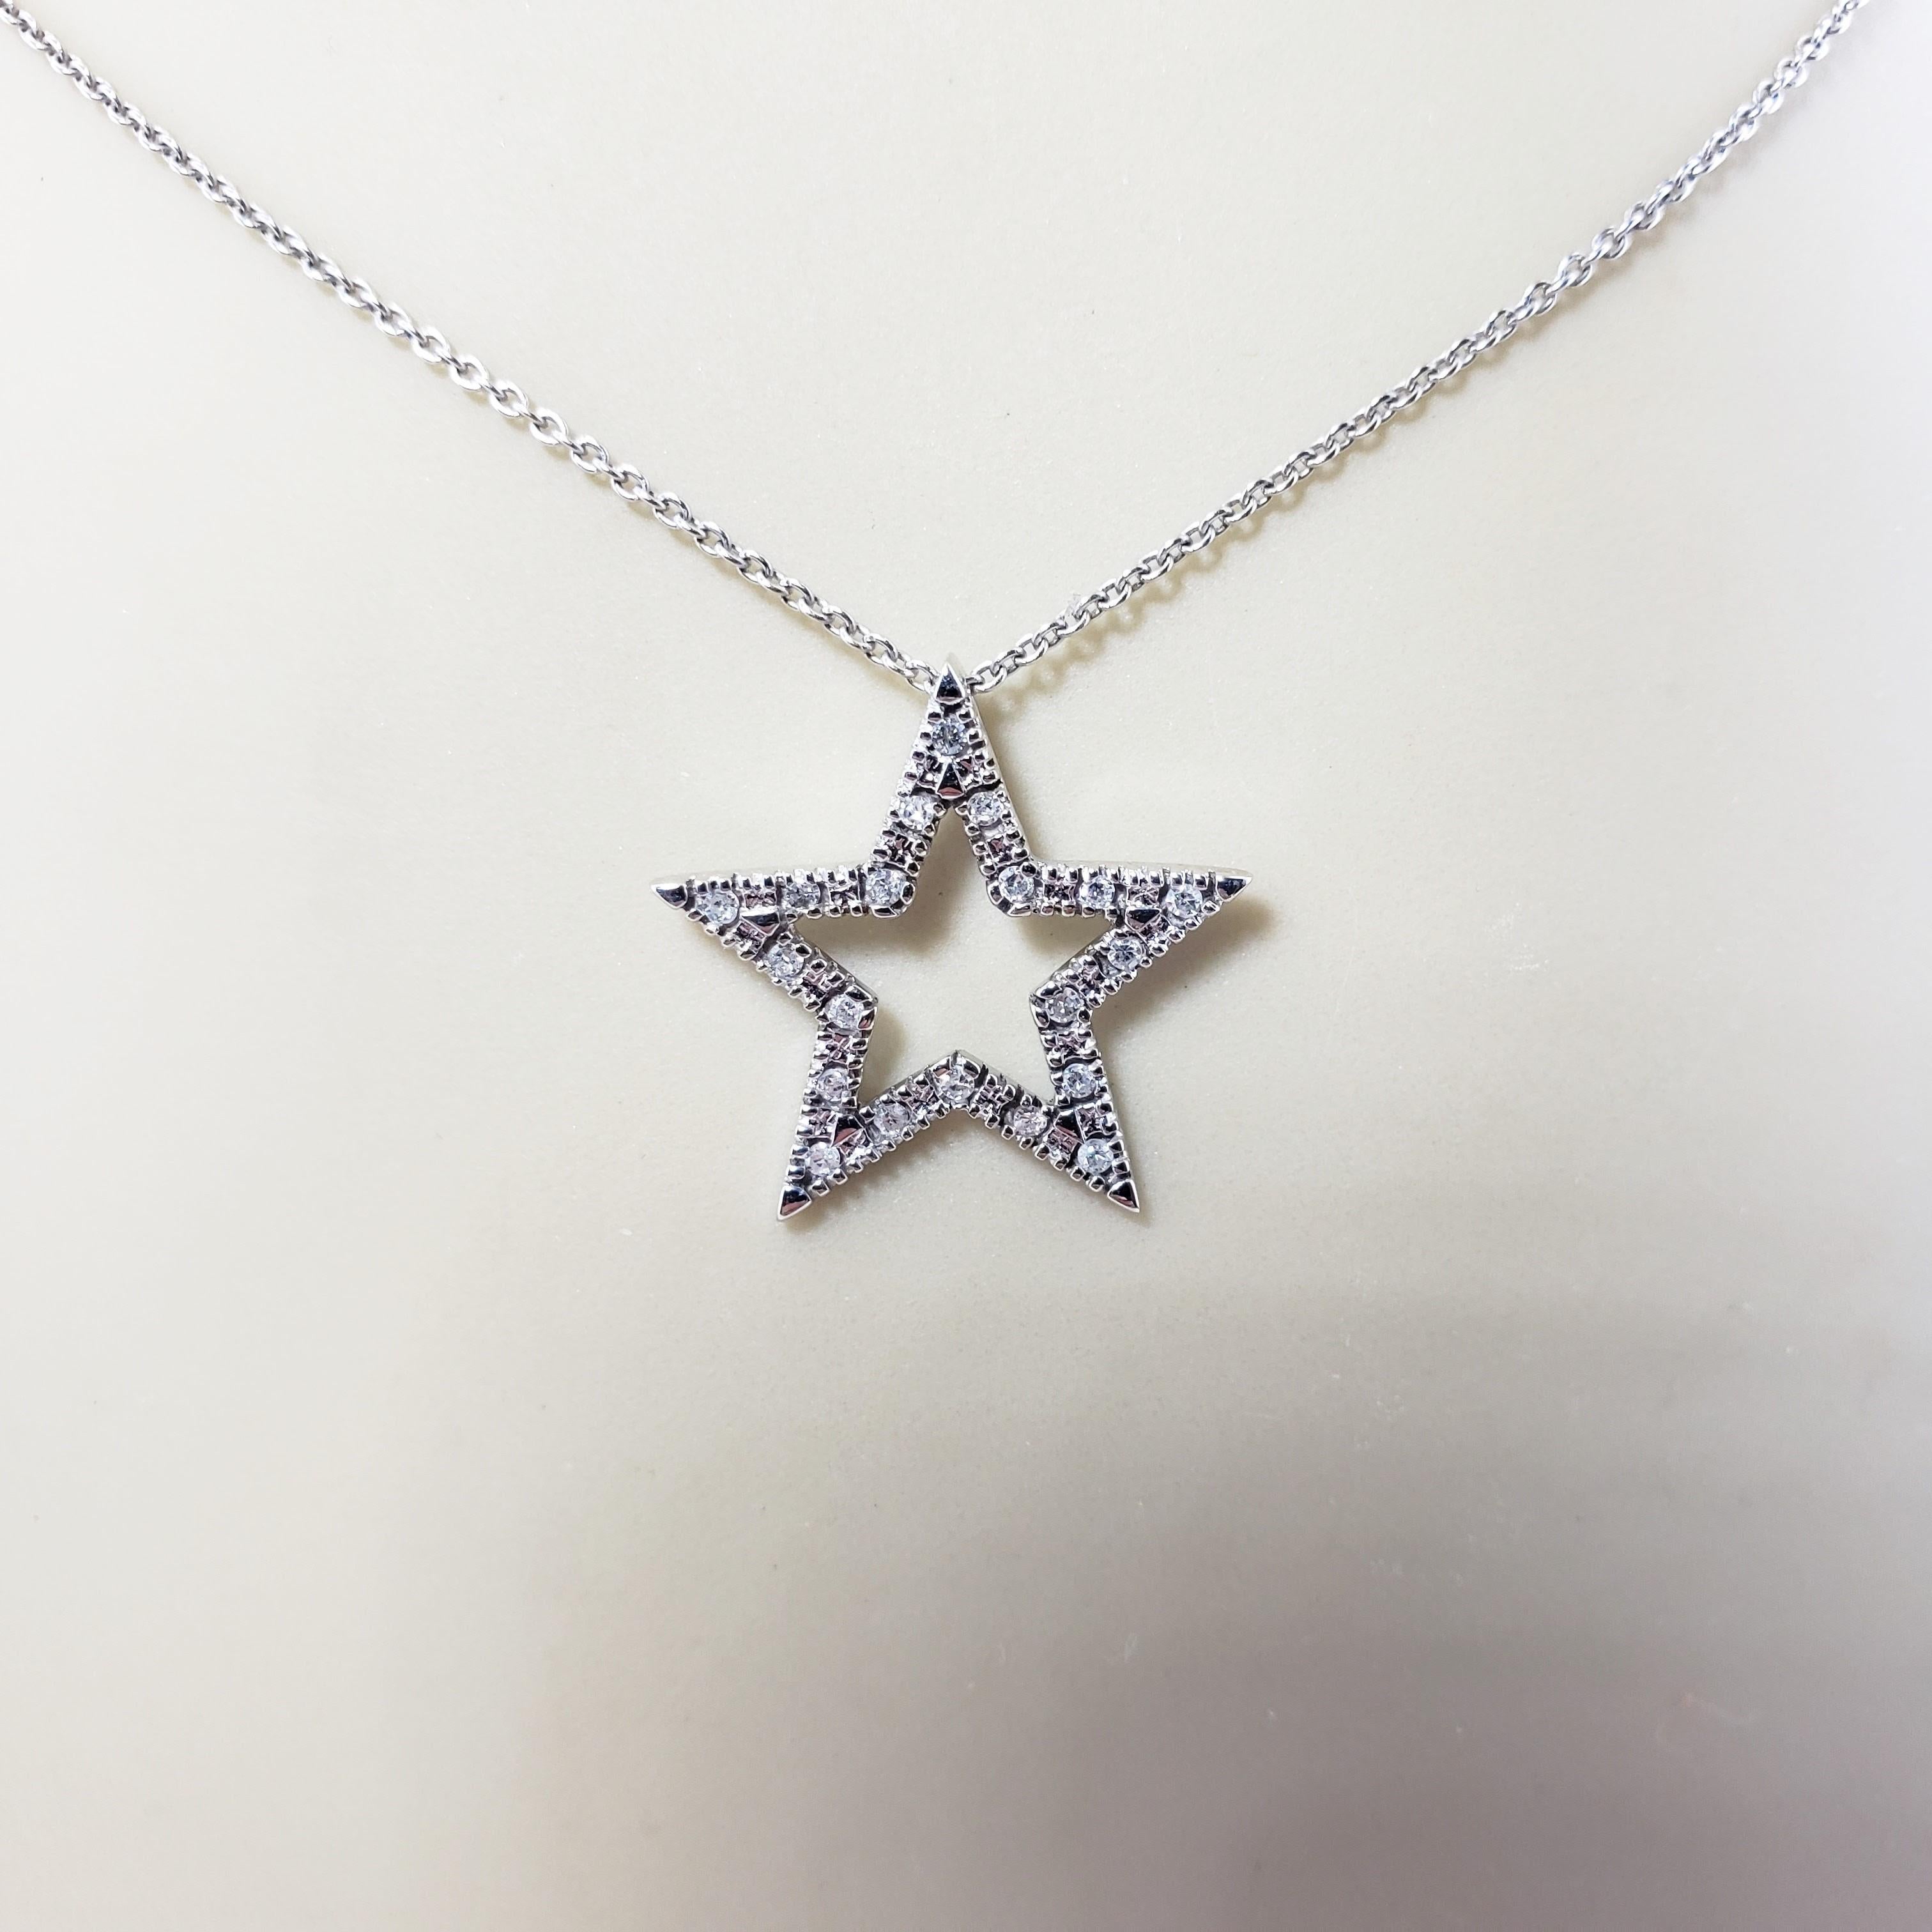 10 Karat White Gold and Diamond Star Pendant #12557 For Sale 4